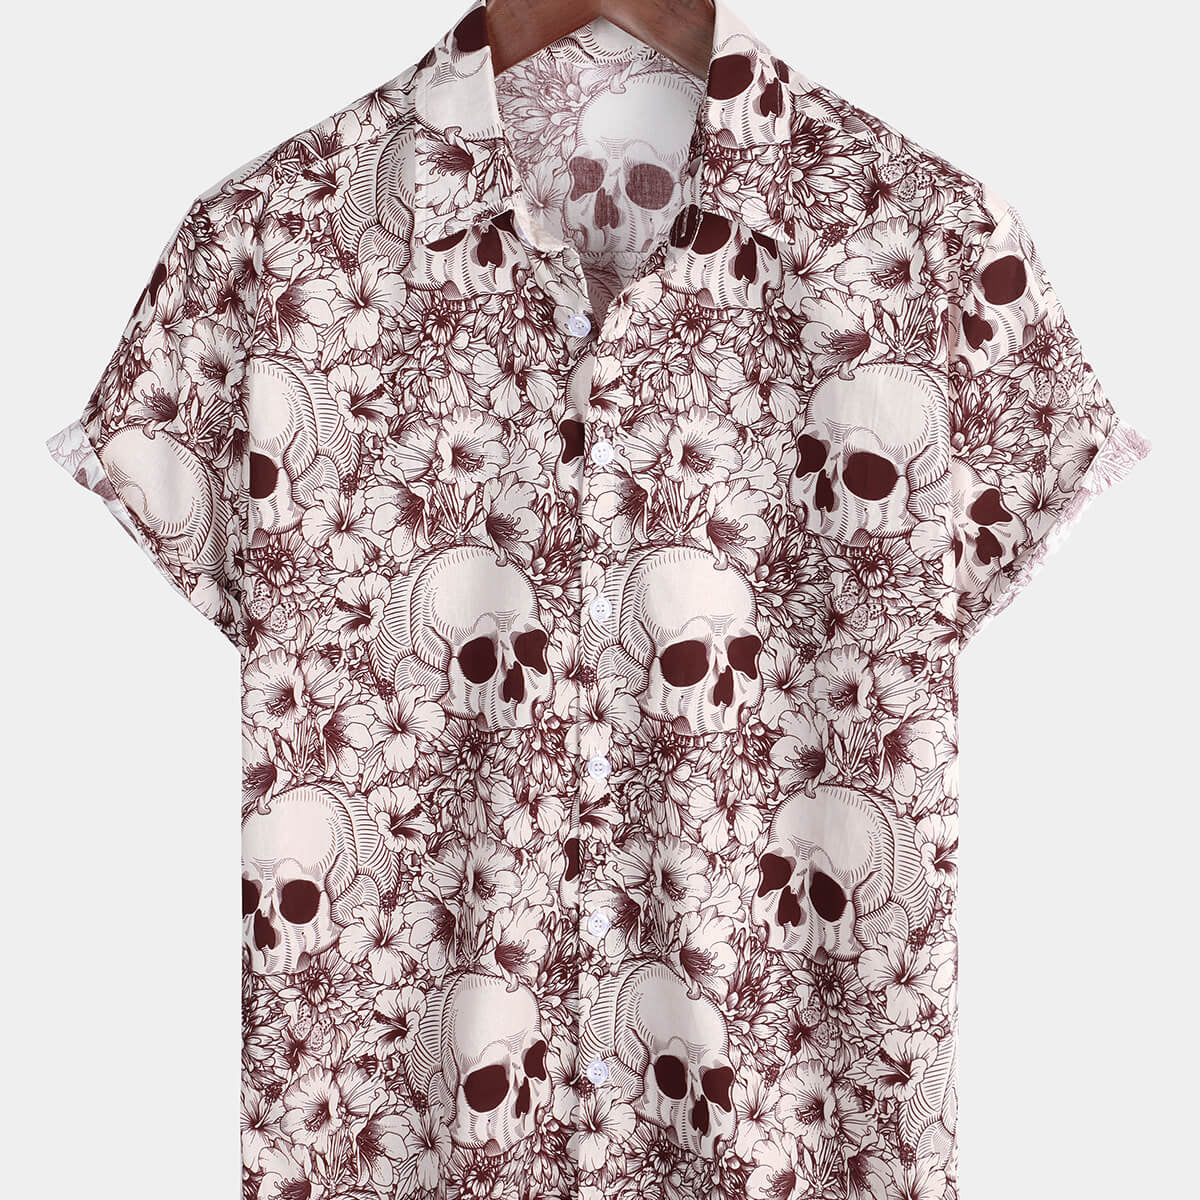 Men's Cool Skull Vacation Button Up Summer Shirt